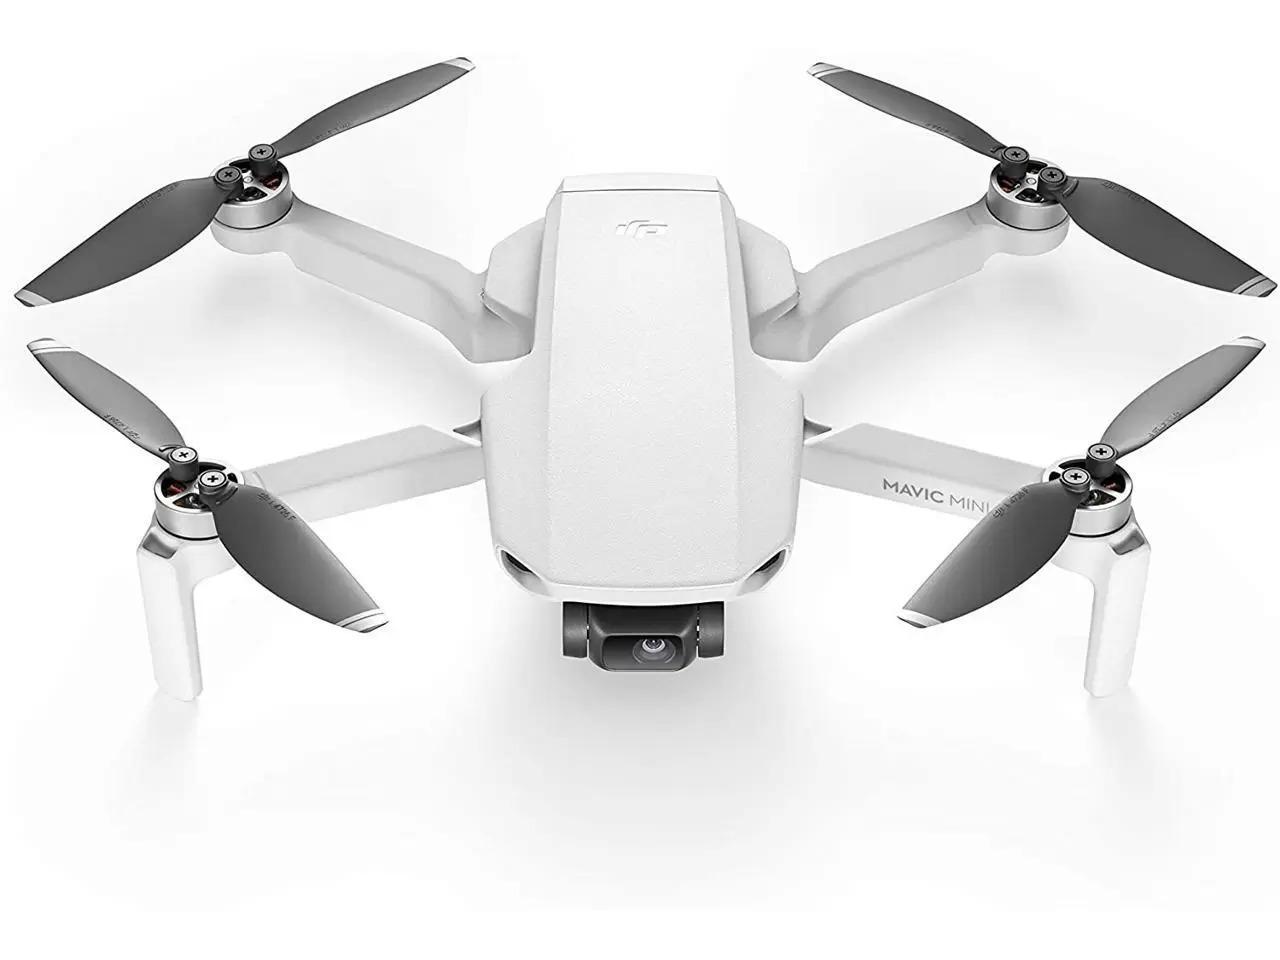 DJI Mavic Mini Quadcopter Drone for $179.99 Shipped